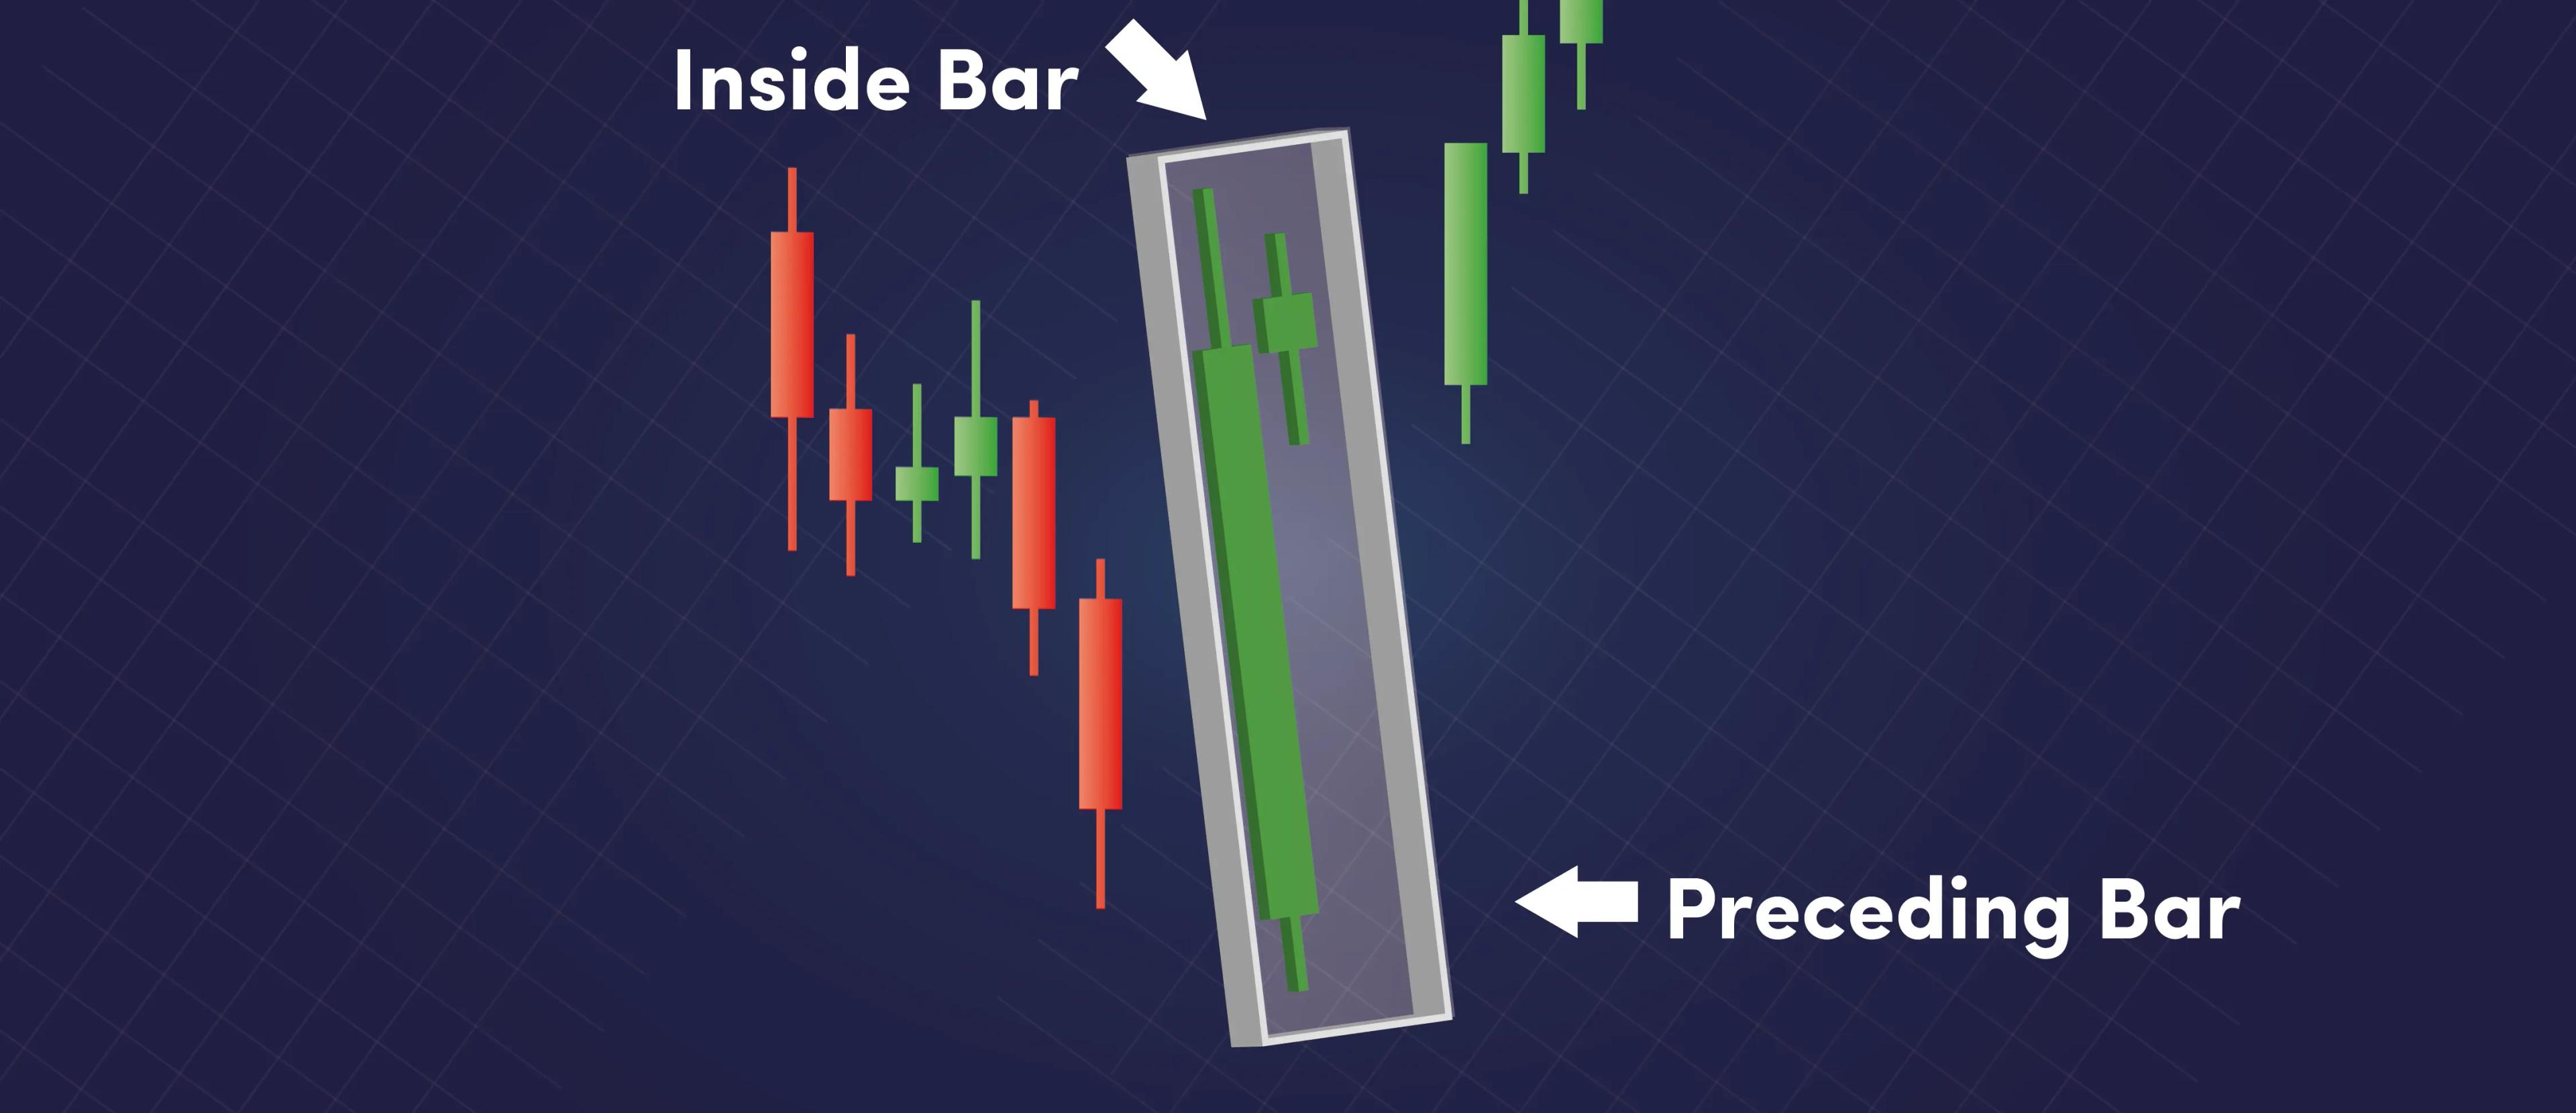 Crypto trading 101: How to Trade Inside Bars in the Crypto Market